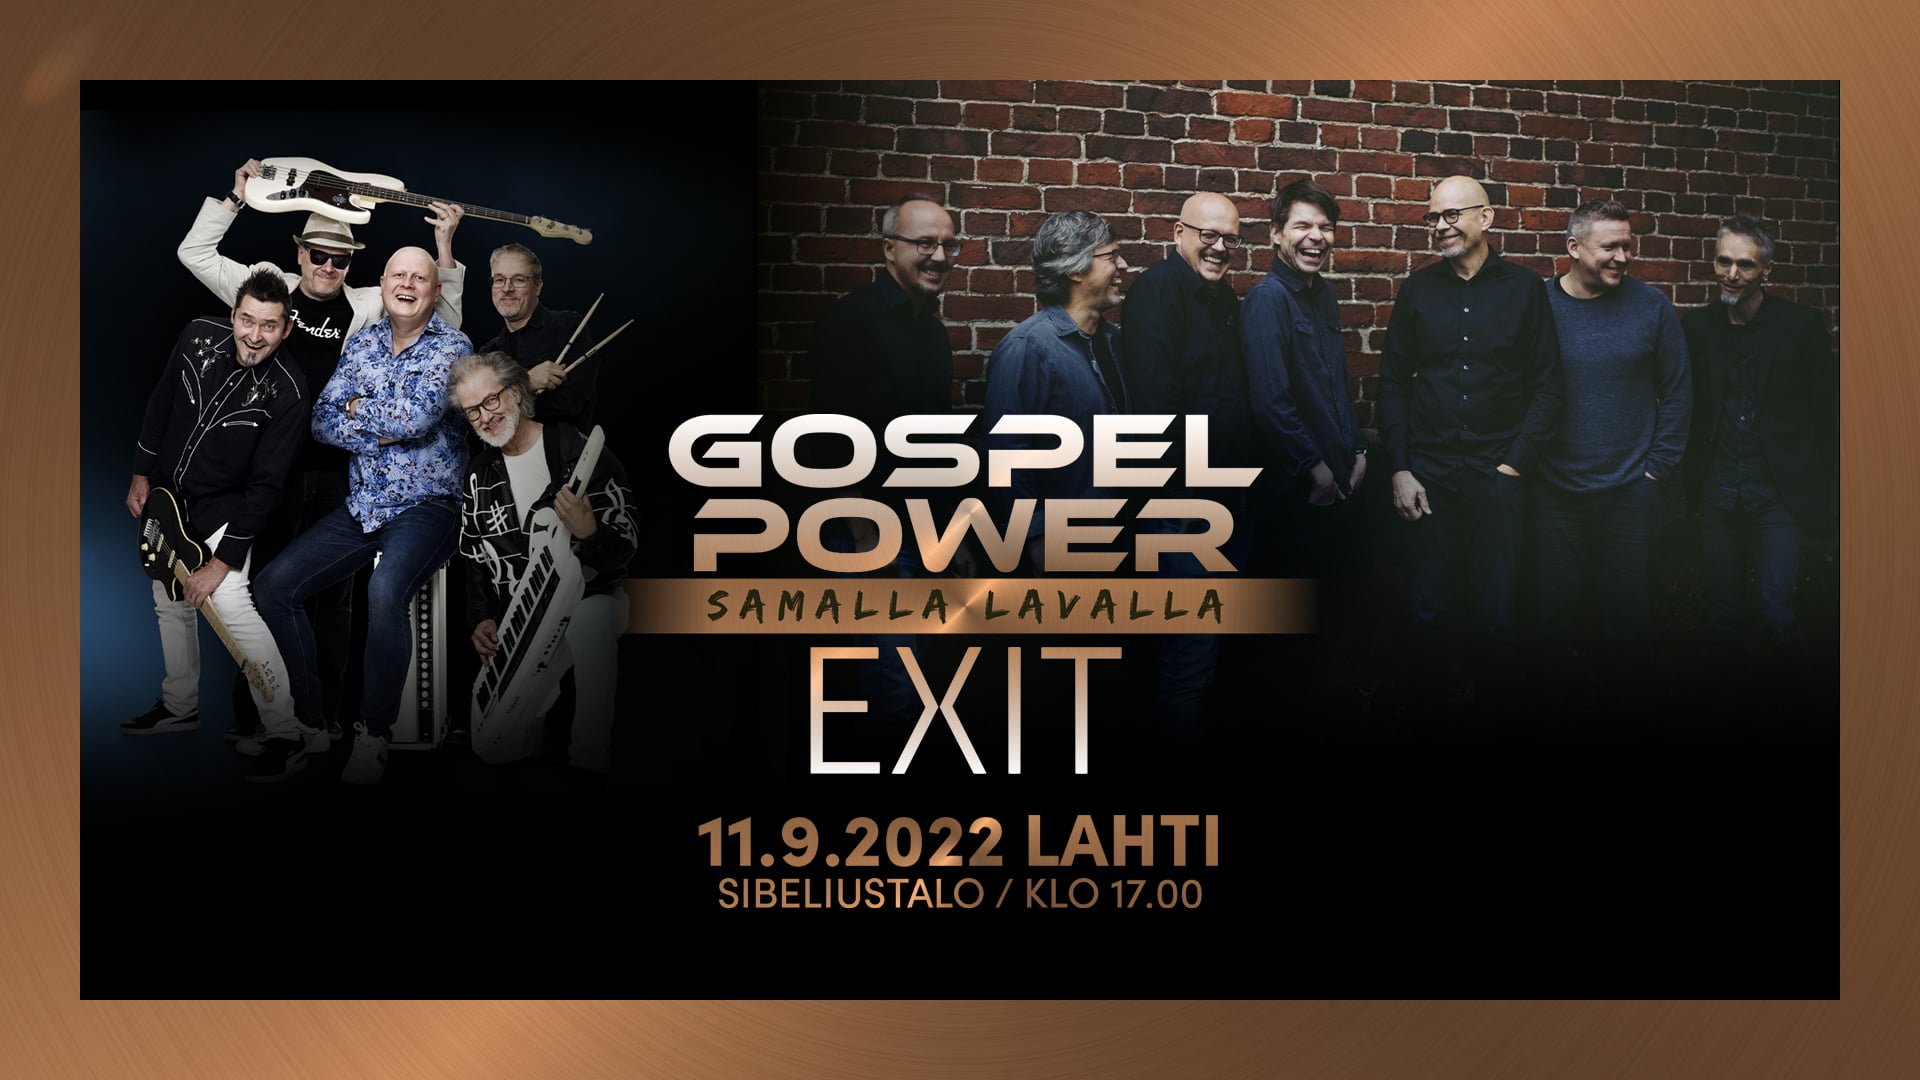 Gospel Power ja Exit – Samalla lavalla 11.9.2022